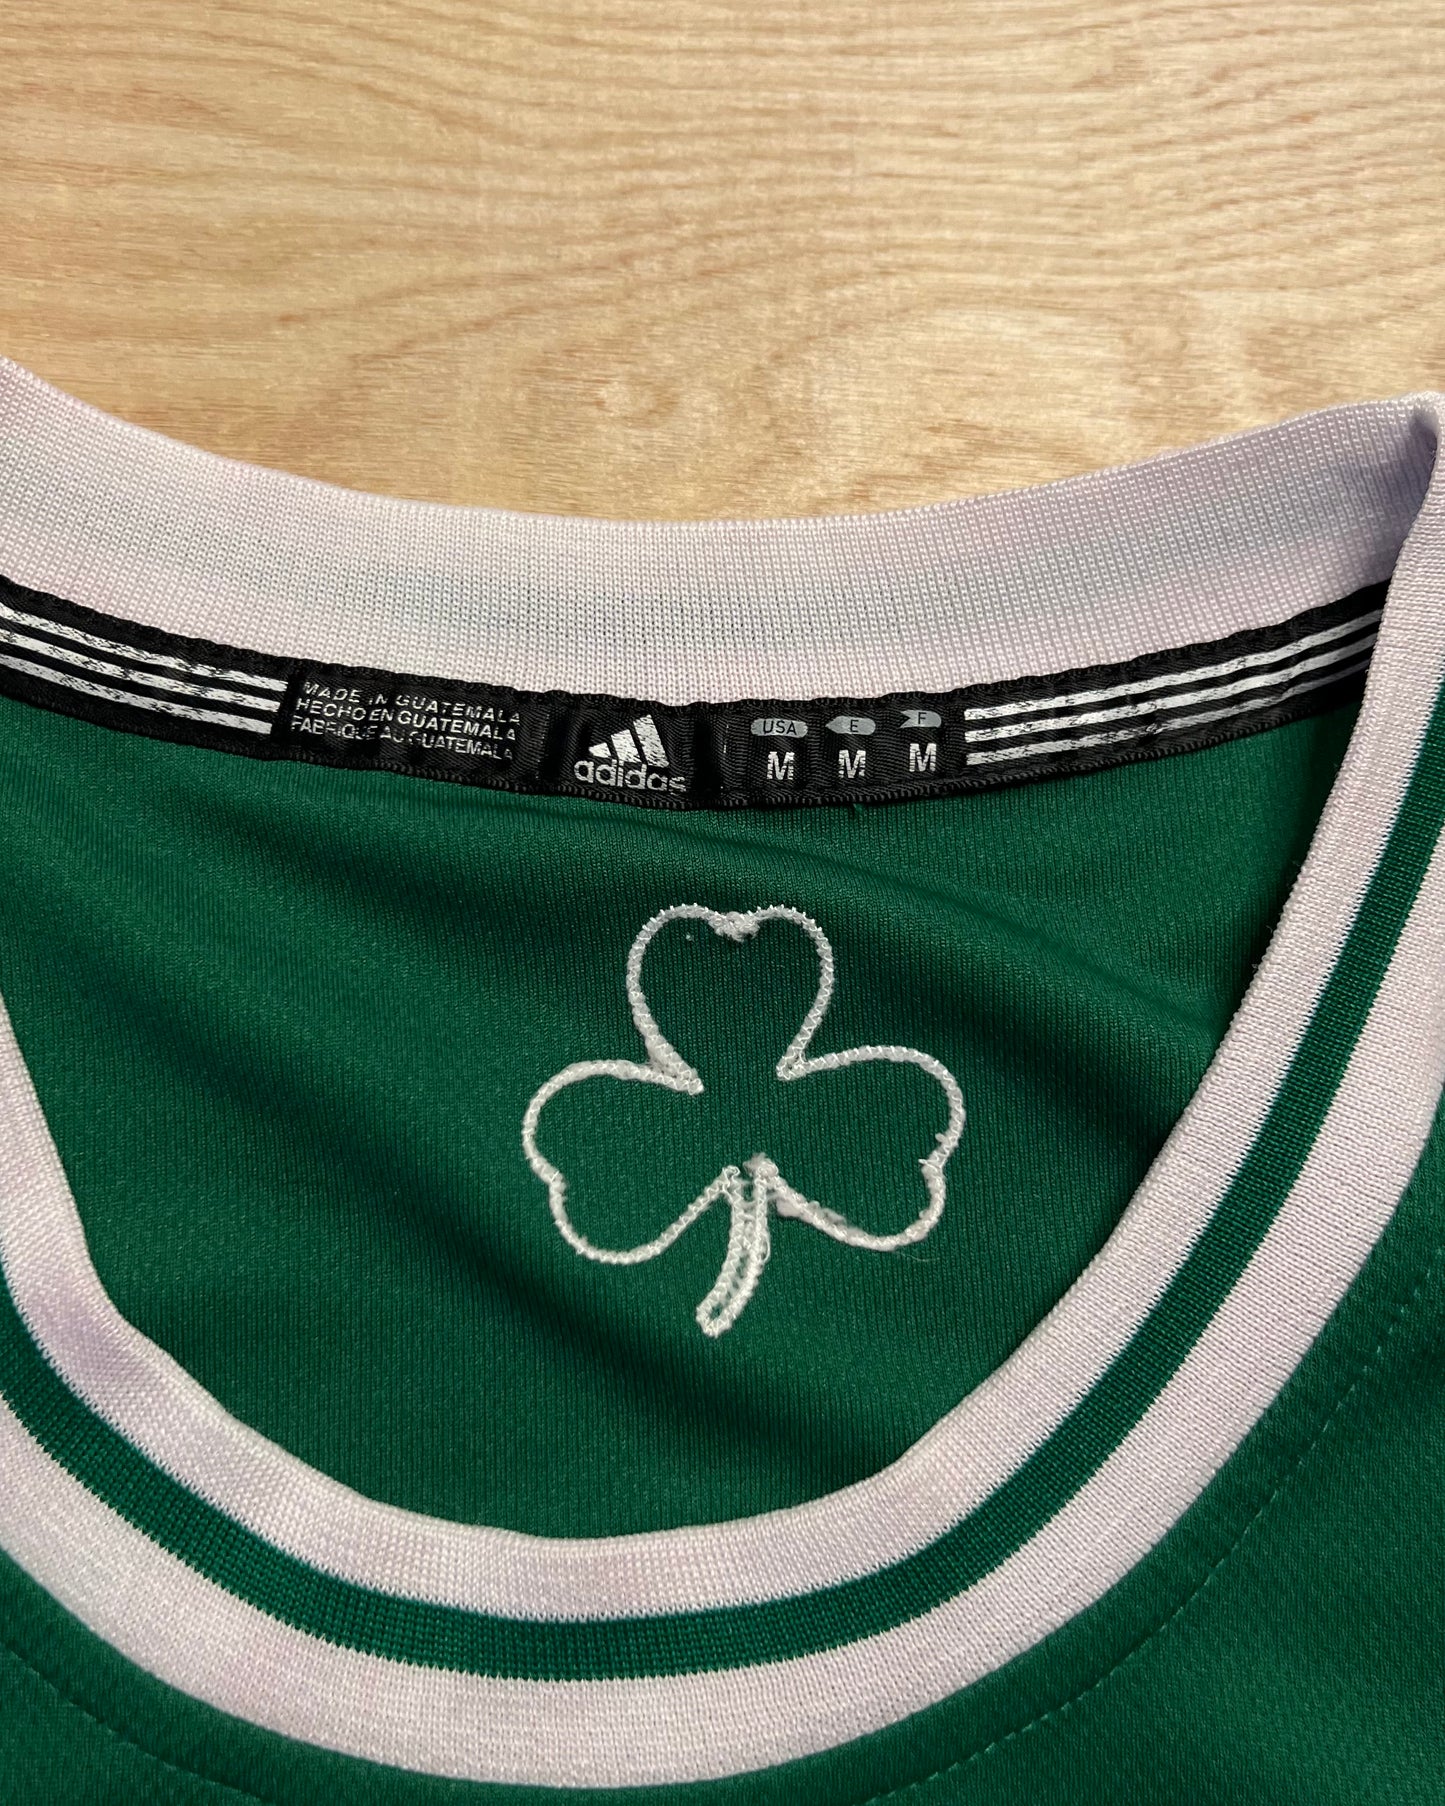 2010's Paul Pierce Boston Celtics Adidas Jersey